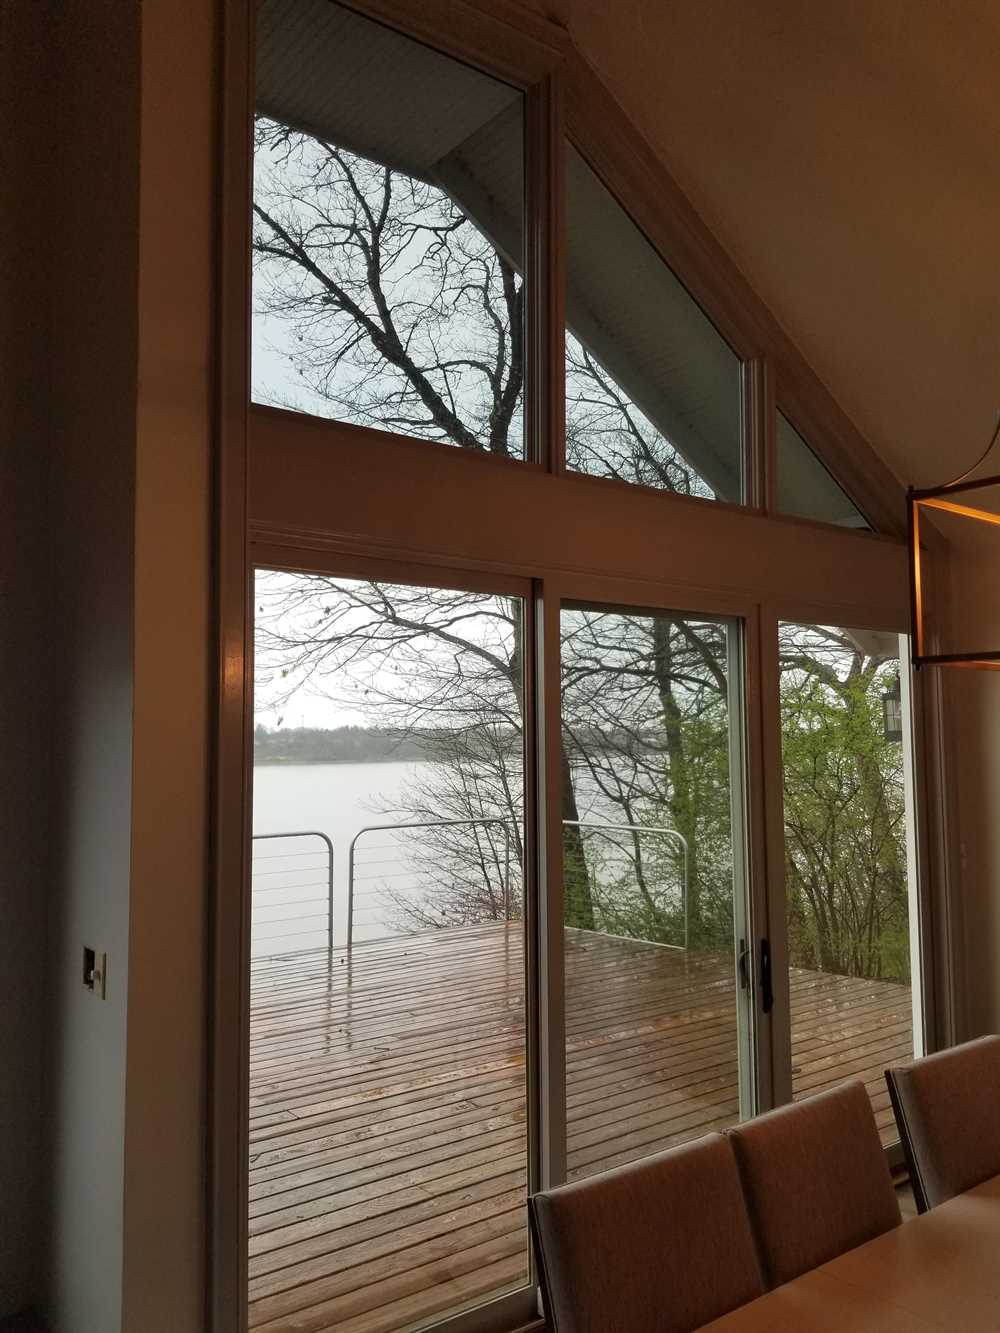 Dual-Reflective Window Film Cuts Home Heat & Glare in Toledo, Ohio - Home Window Tinting in the Toledo, Ohio area.